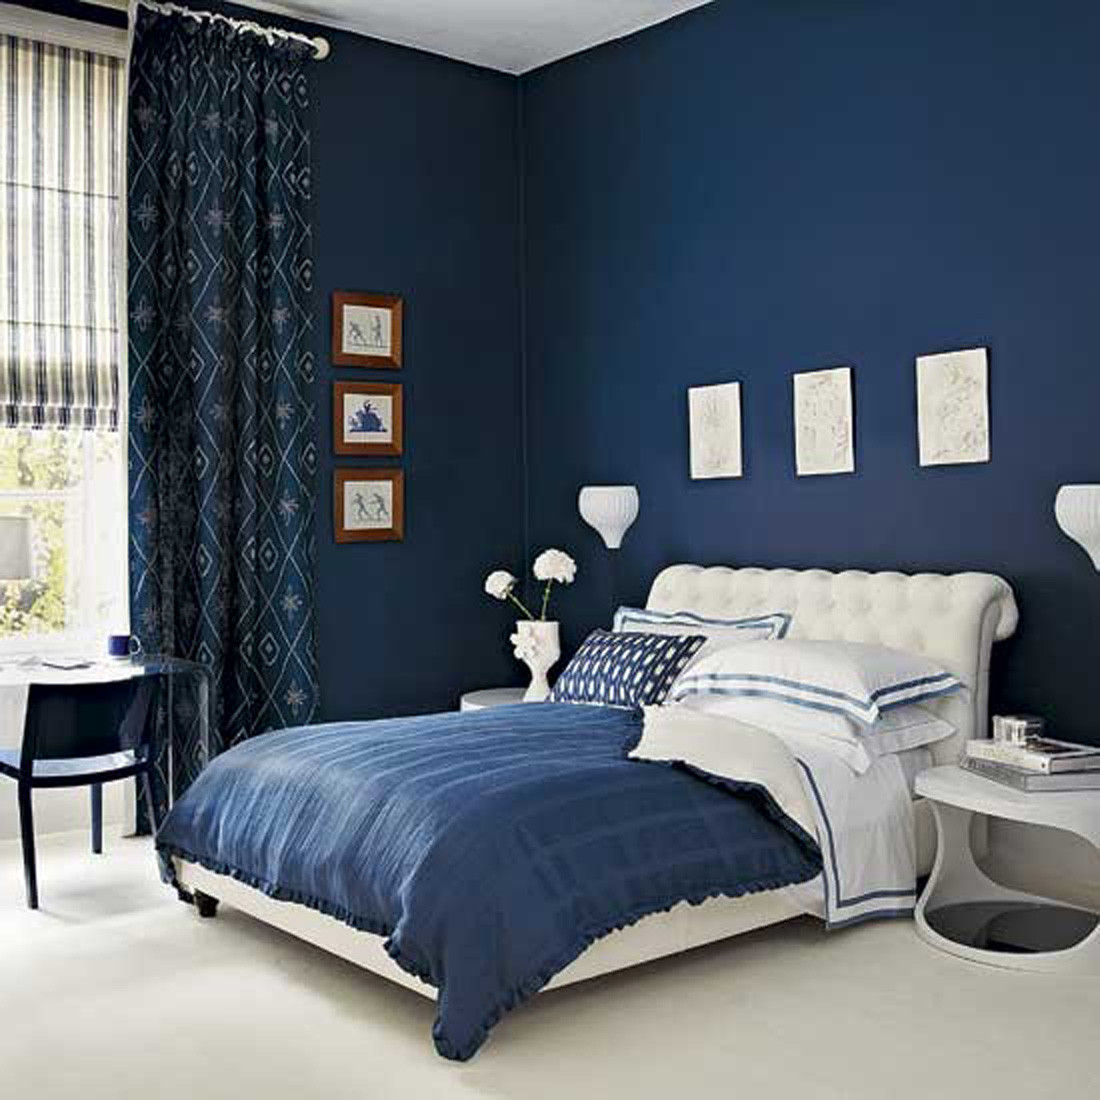 Blue Bedroom Walls
 15 Beautiful Dark Blue Wall Design Ideas